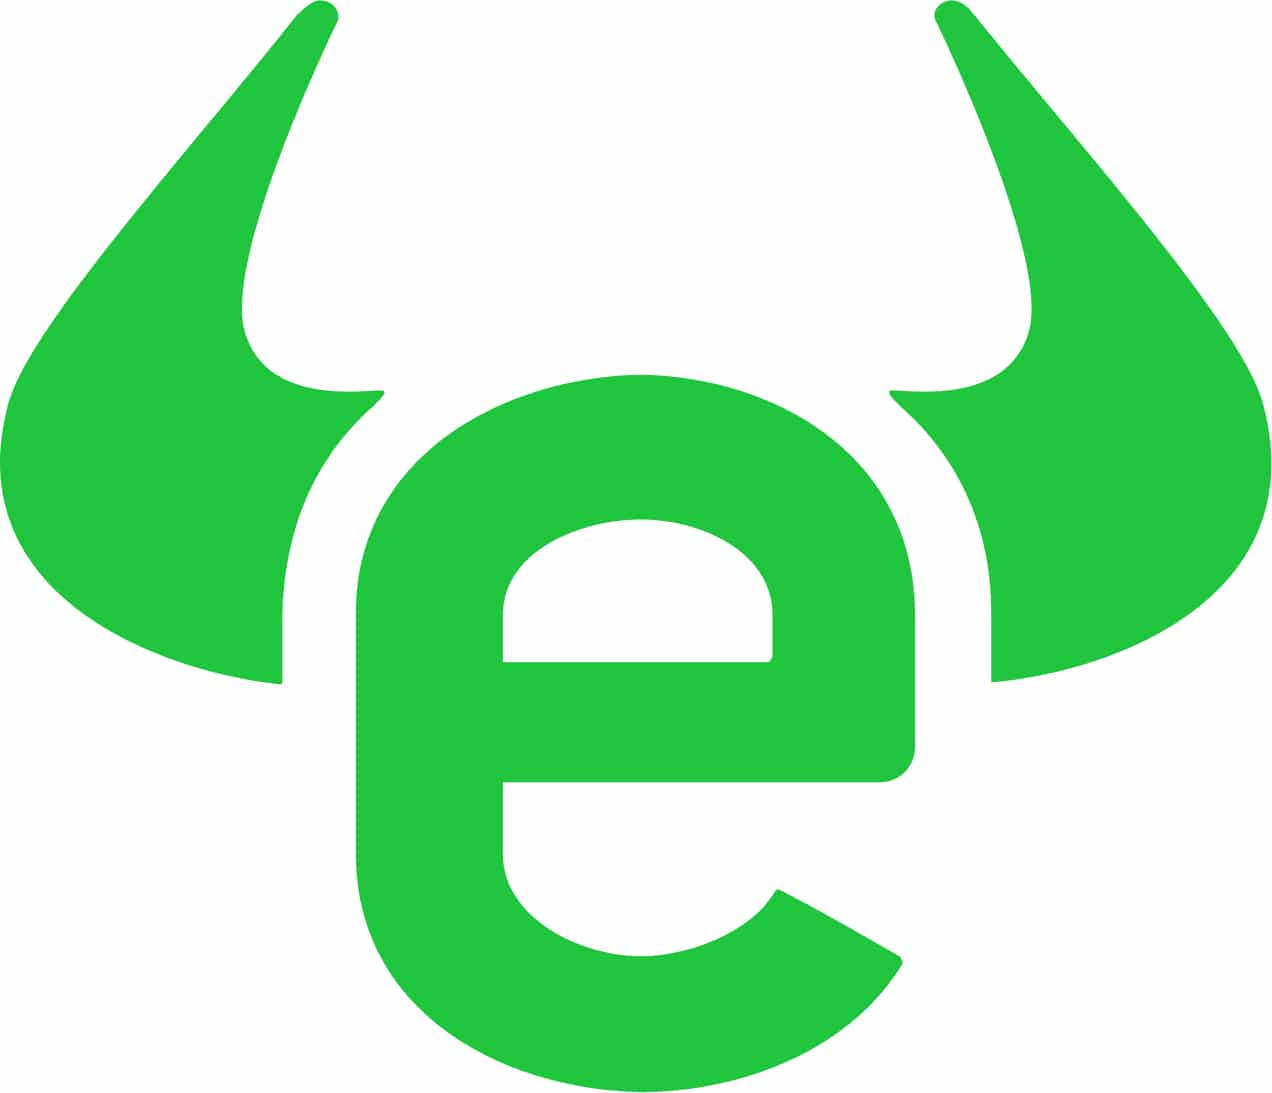 eToro - Best Trading Platform with 0% Commissions on Stocks and ETFs